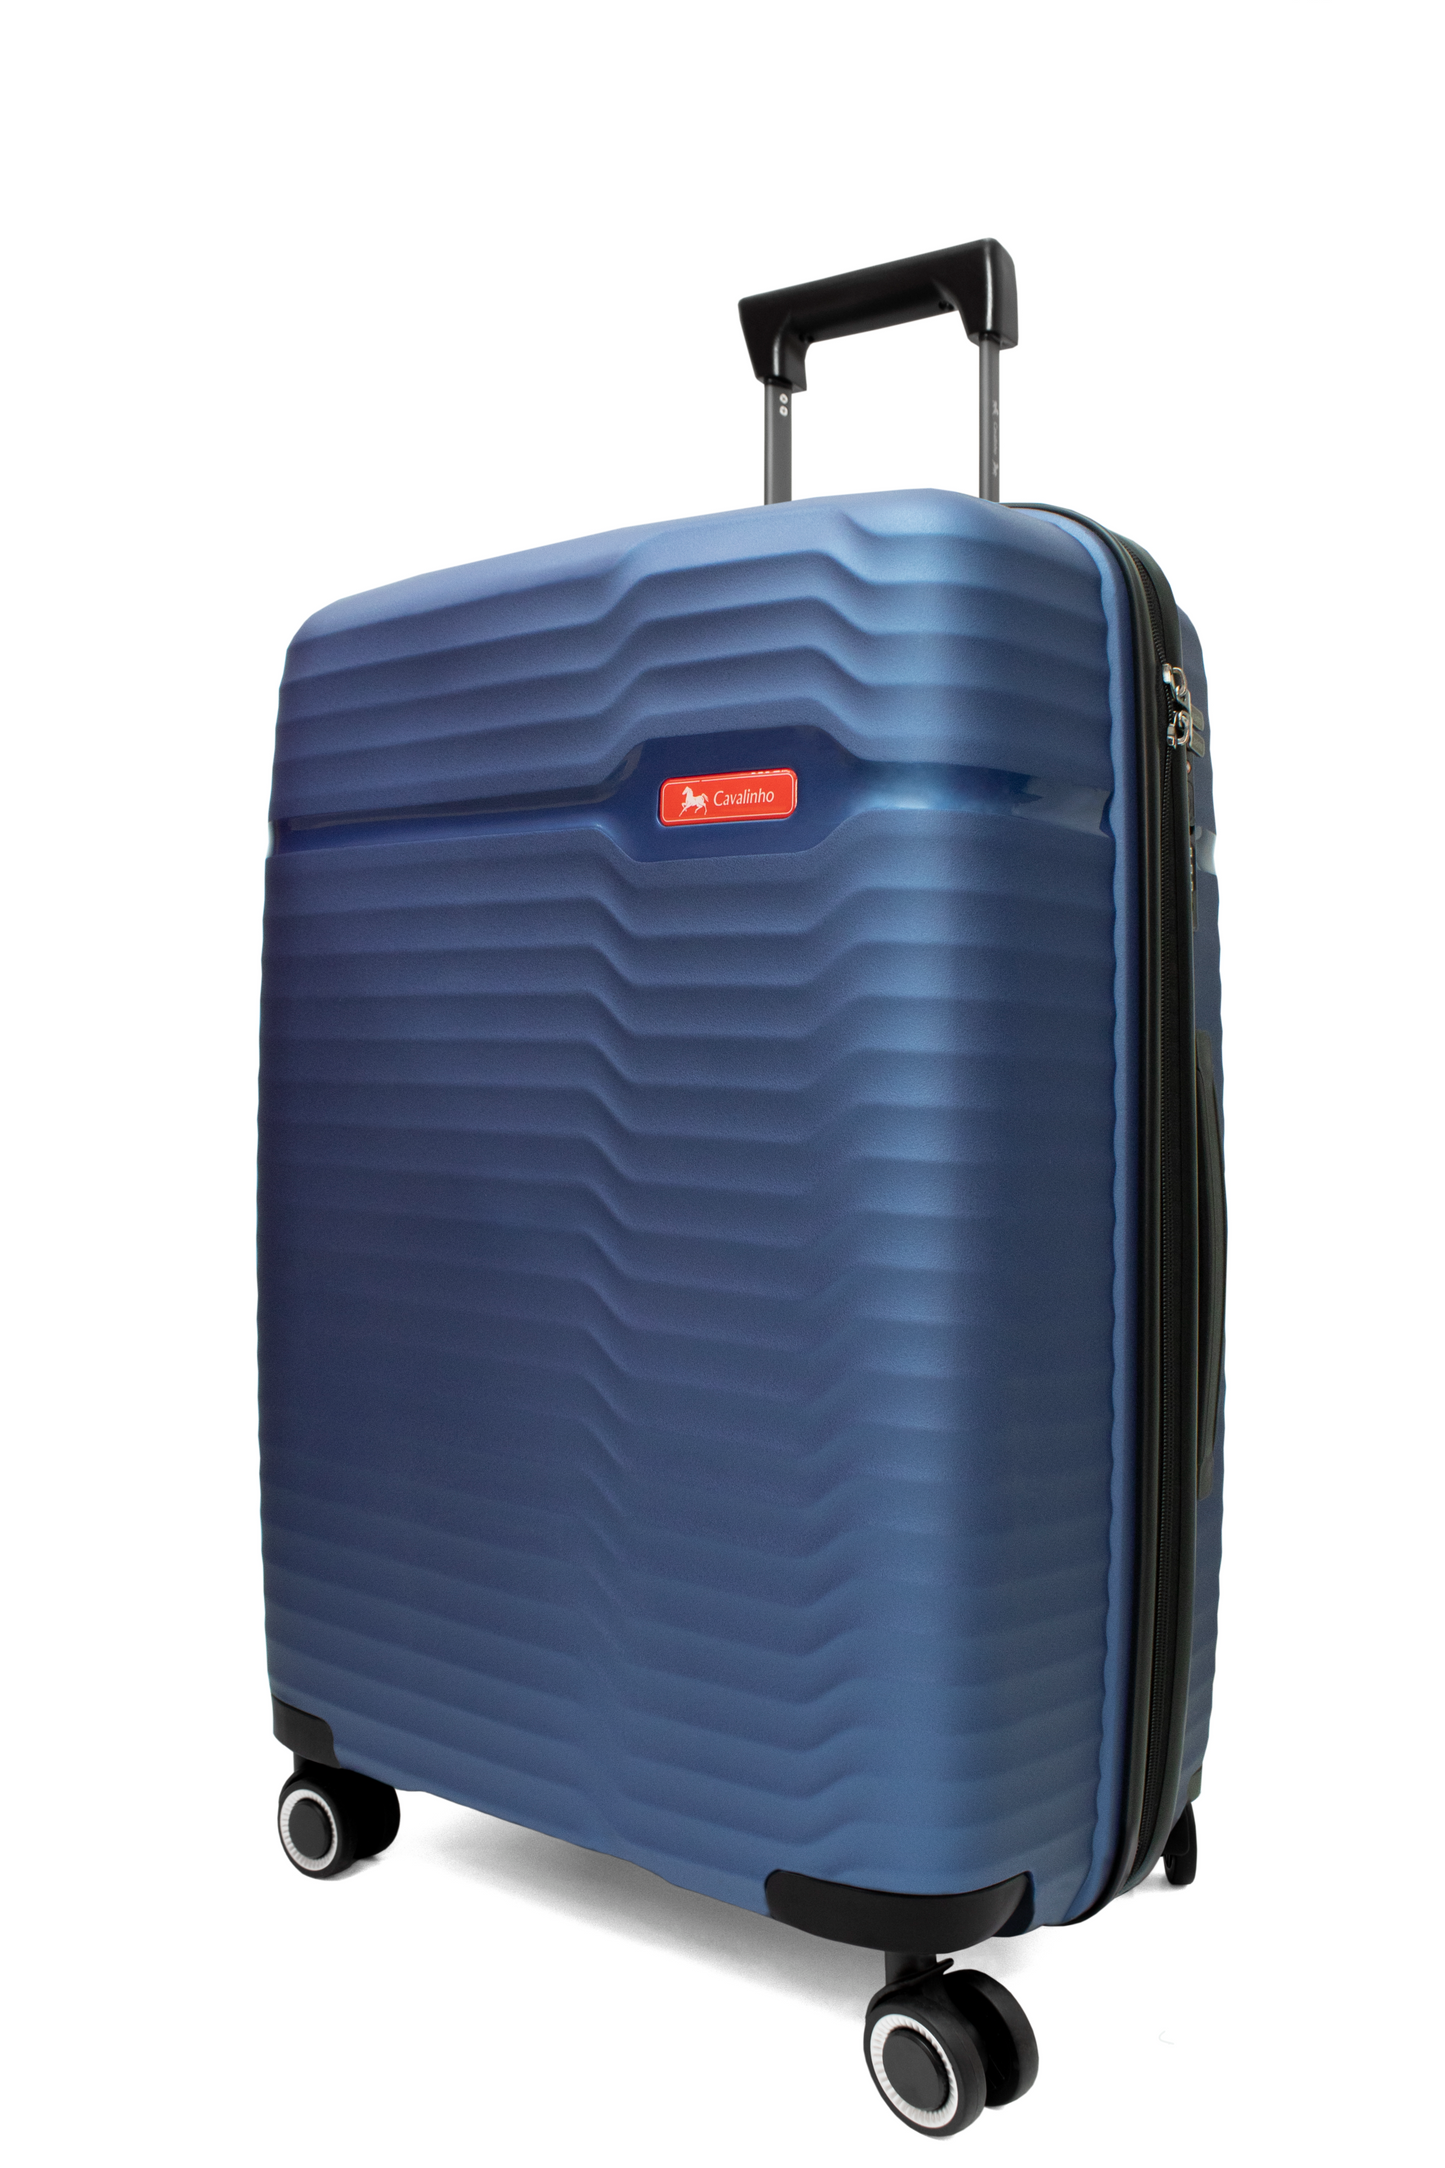 Cavalinho 2 Piece Hardside Luggage Set (14" & 28") - 14 inch & 28 inch Set SteelBlue - 68010003.03.24_2S_b3ccfc5b-4c70-4225-8a79-9cb768ce3a6c